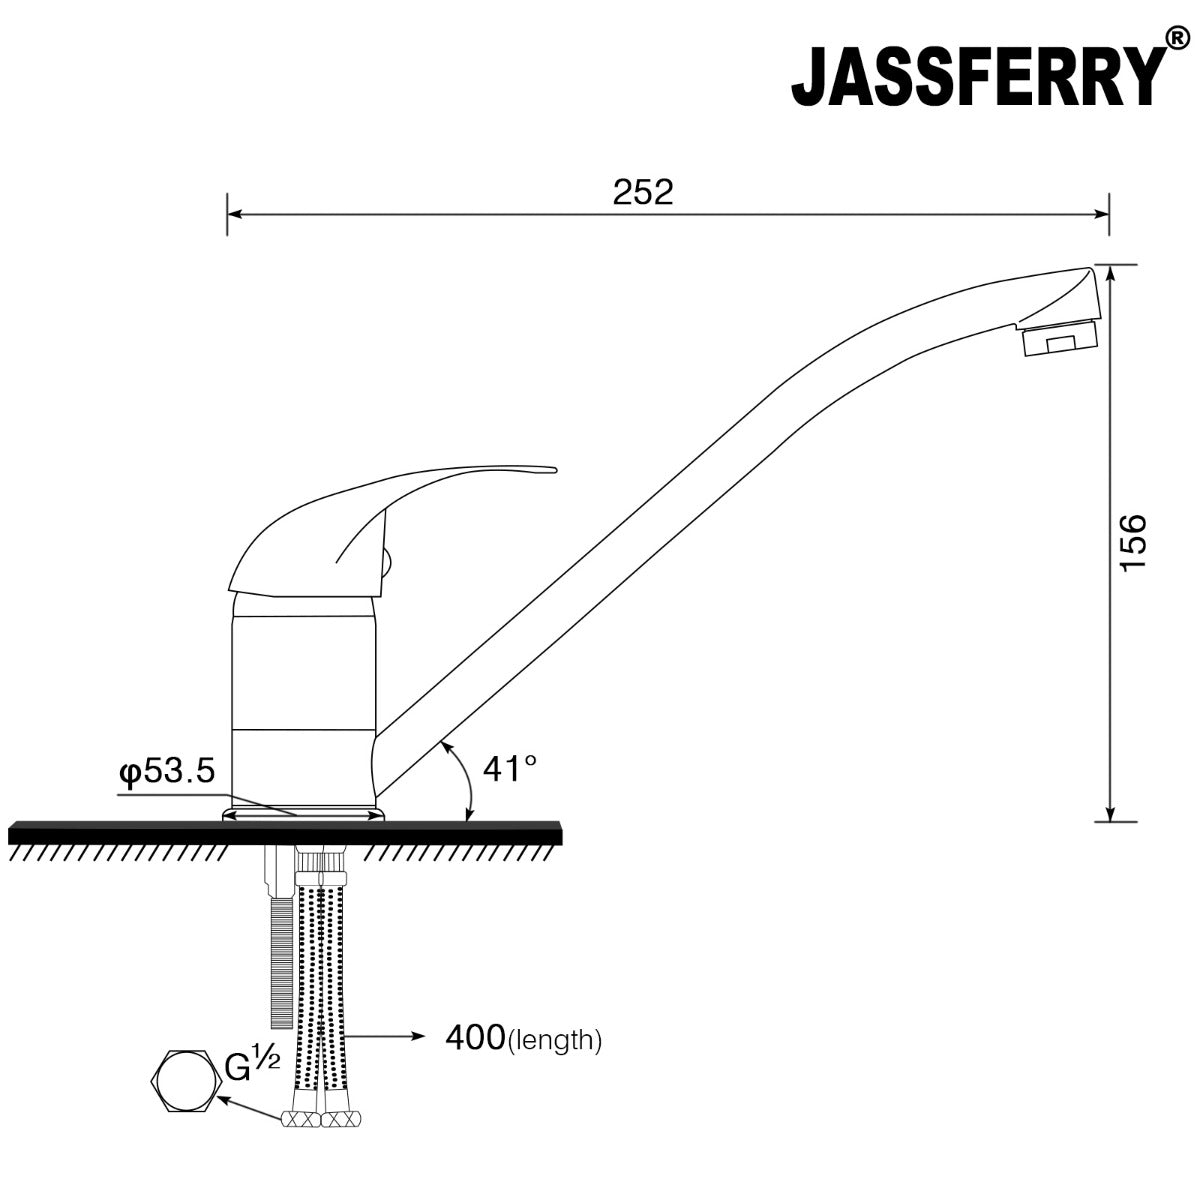 JassferryJASSFERRY New Nickel Brushed Kitchen Sink Mixer Taps Single Lever Swivel SpoutKitchen taps